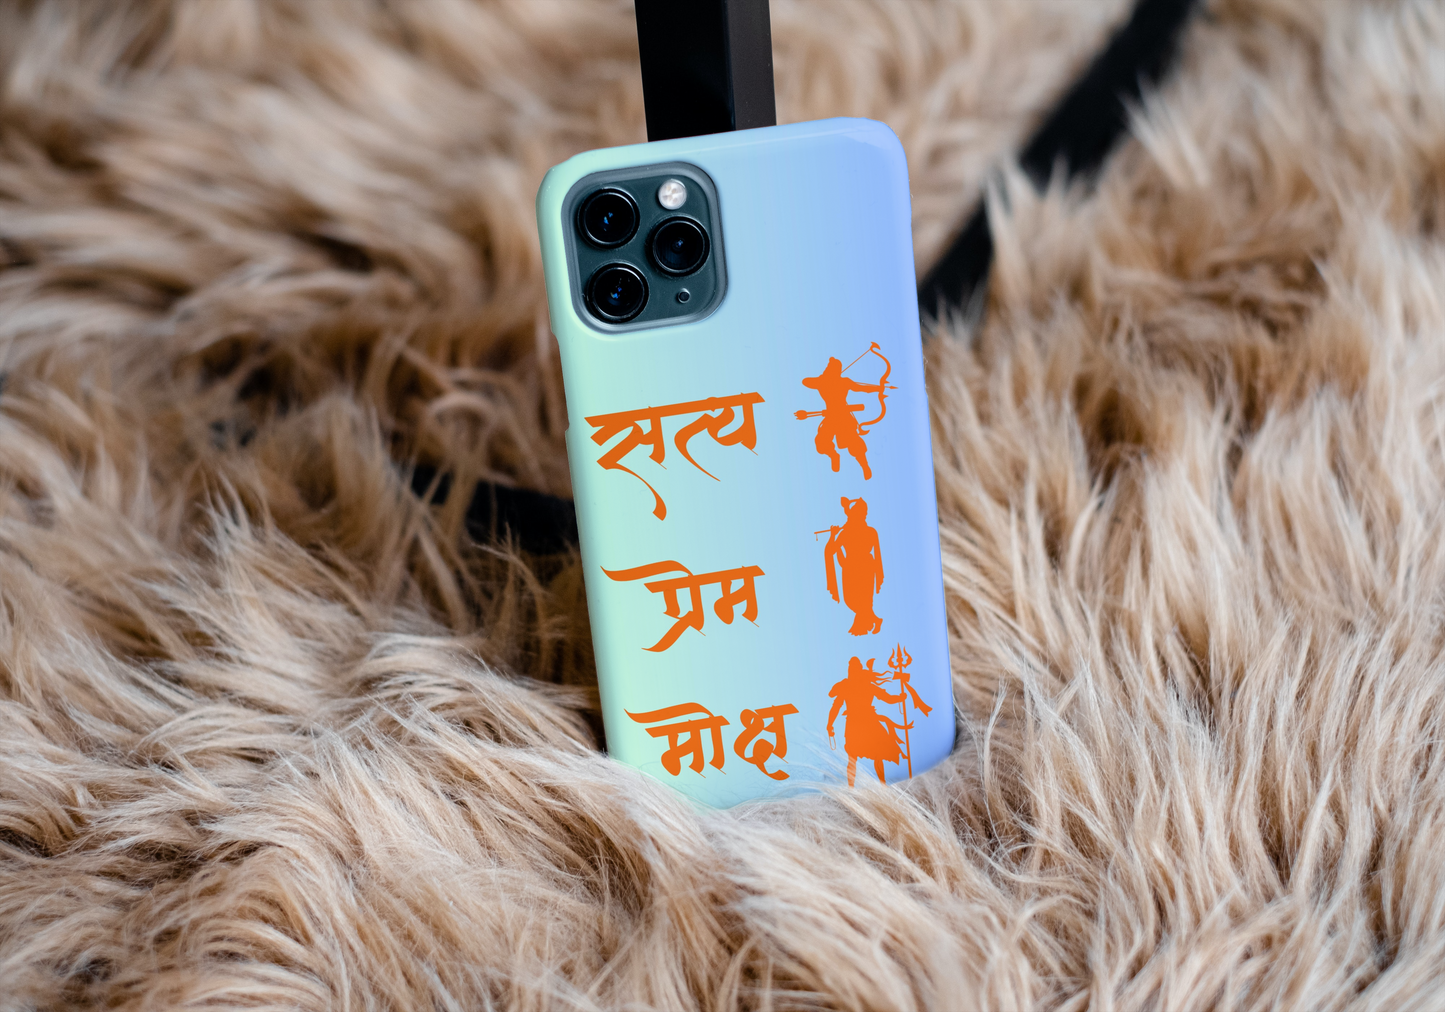 Sanatan dharma iphone phone cover | hindu dharma phone cover | satay prem moksh phone cover